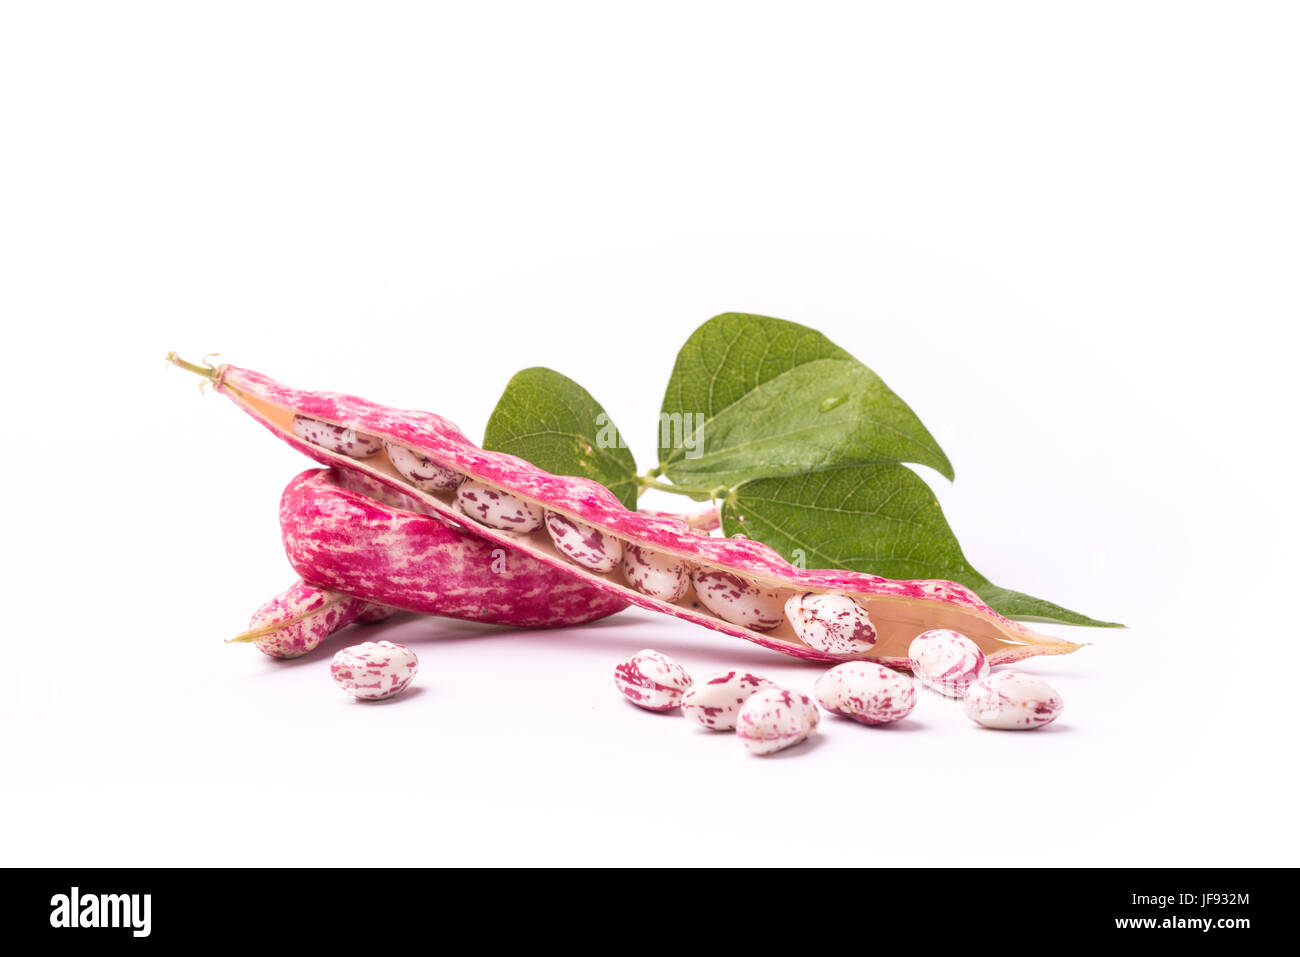 Common beans or phaseolus vulgaris on isolated white background Stock Photo